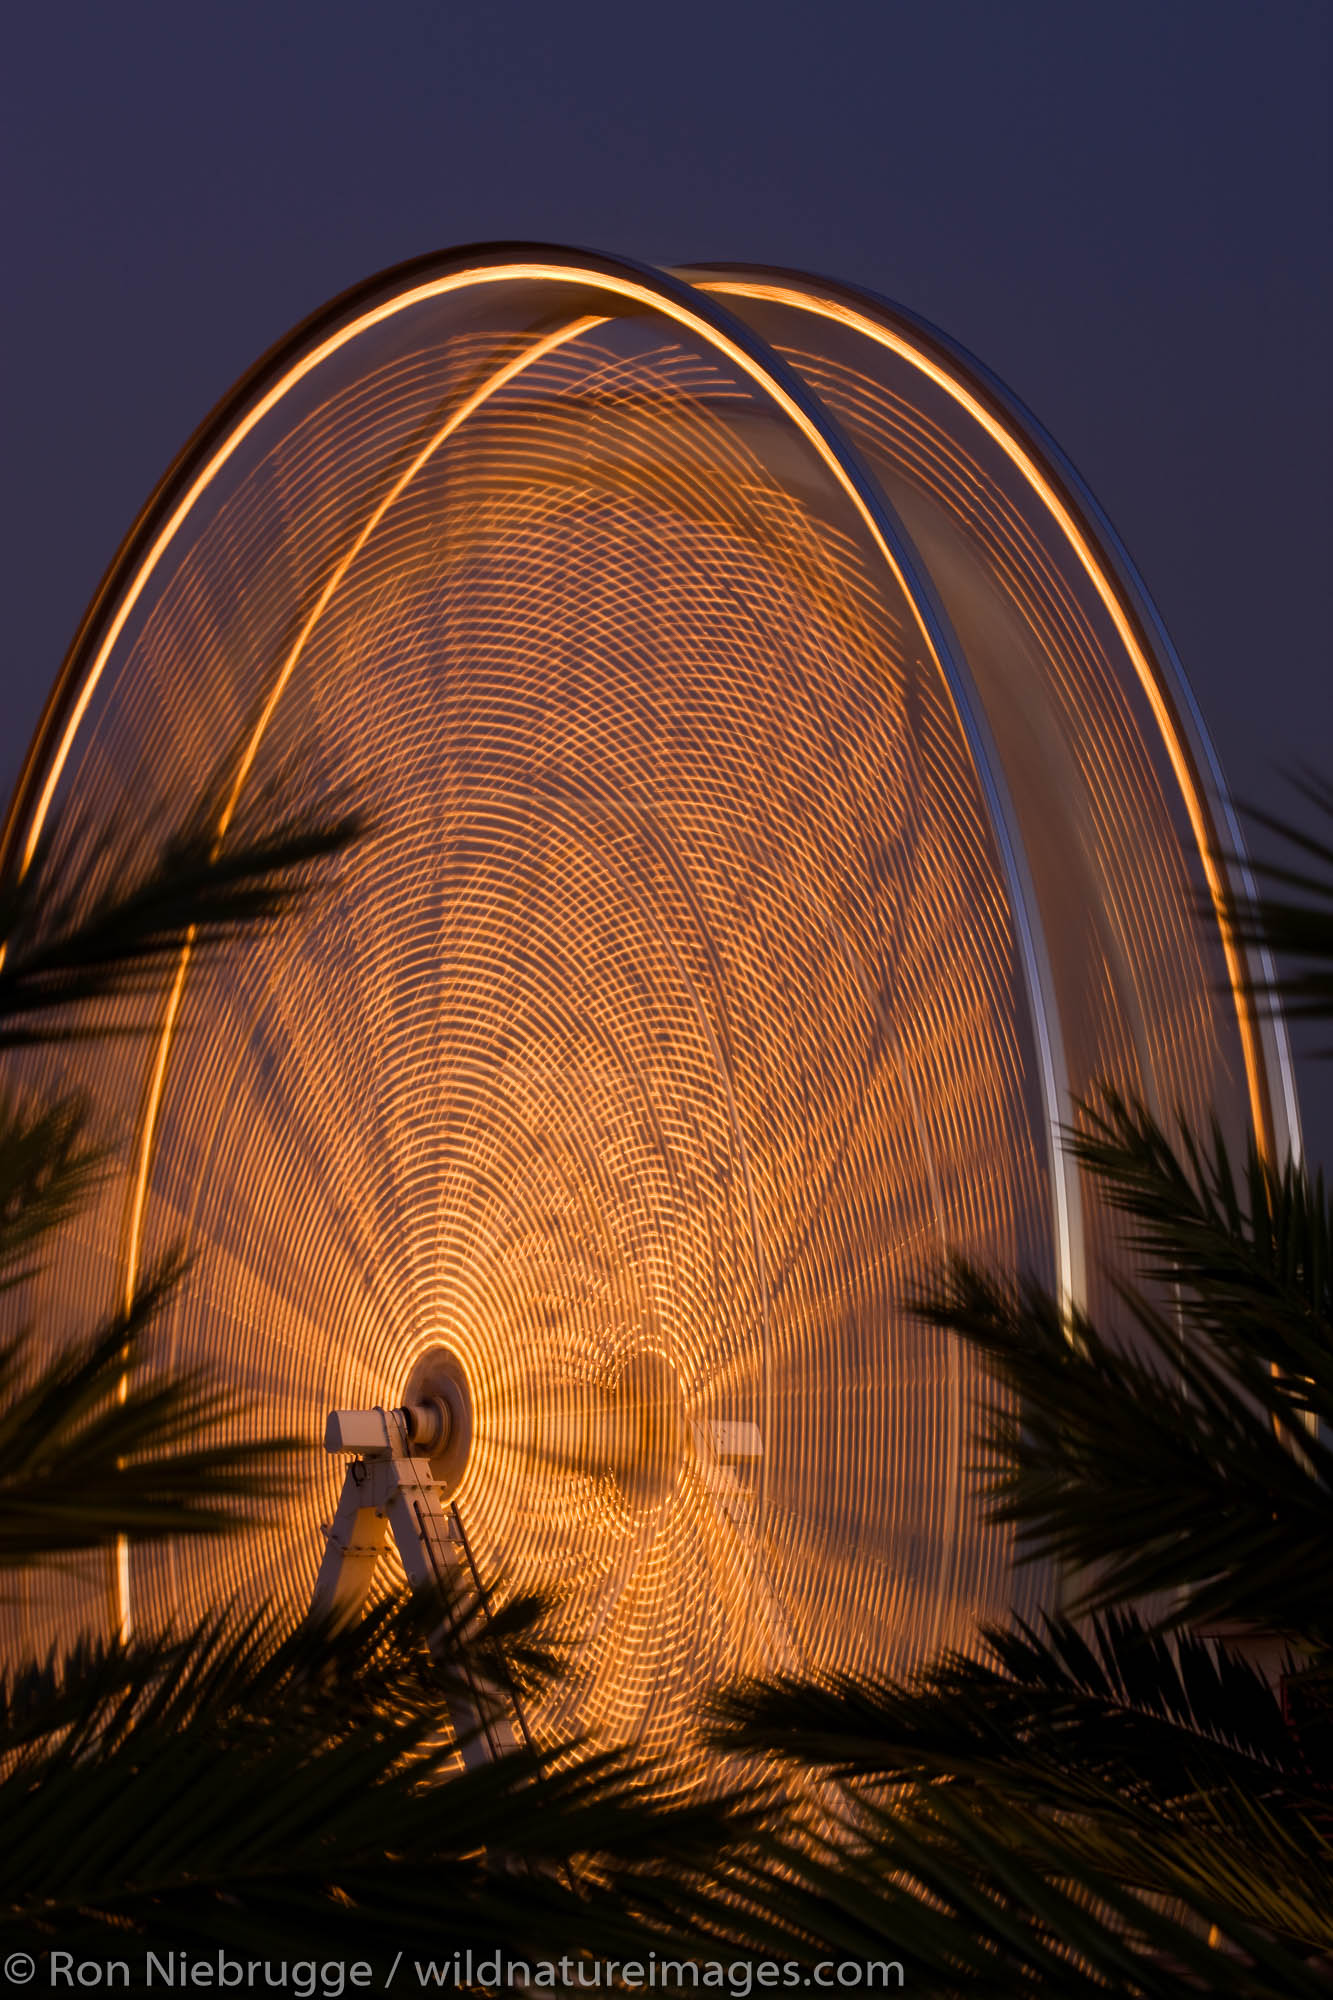 Ferris Wheel at The Pike, Waterfront Center, Long Beach, California.